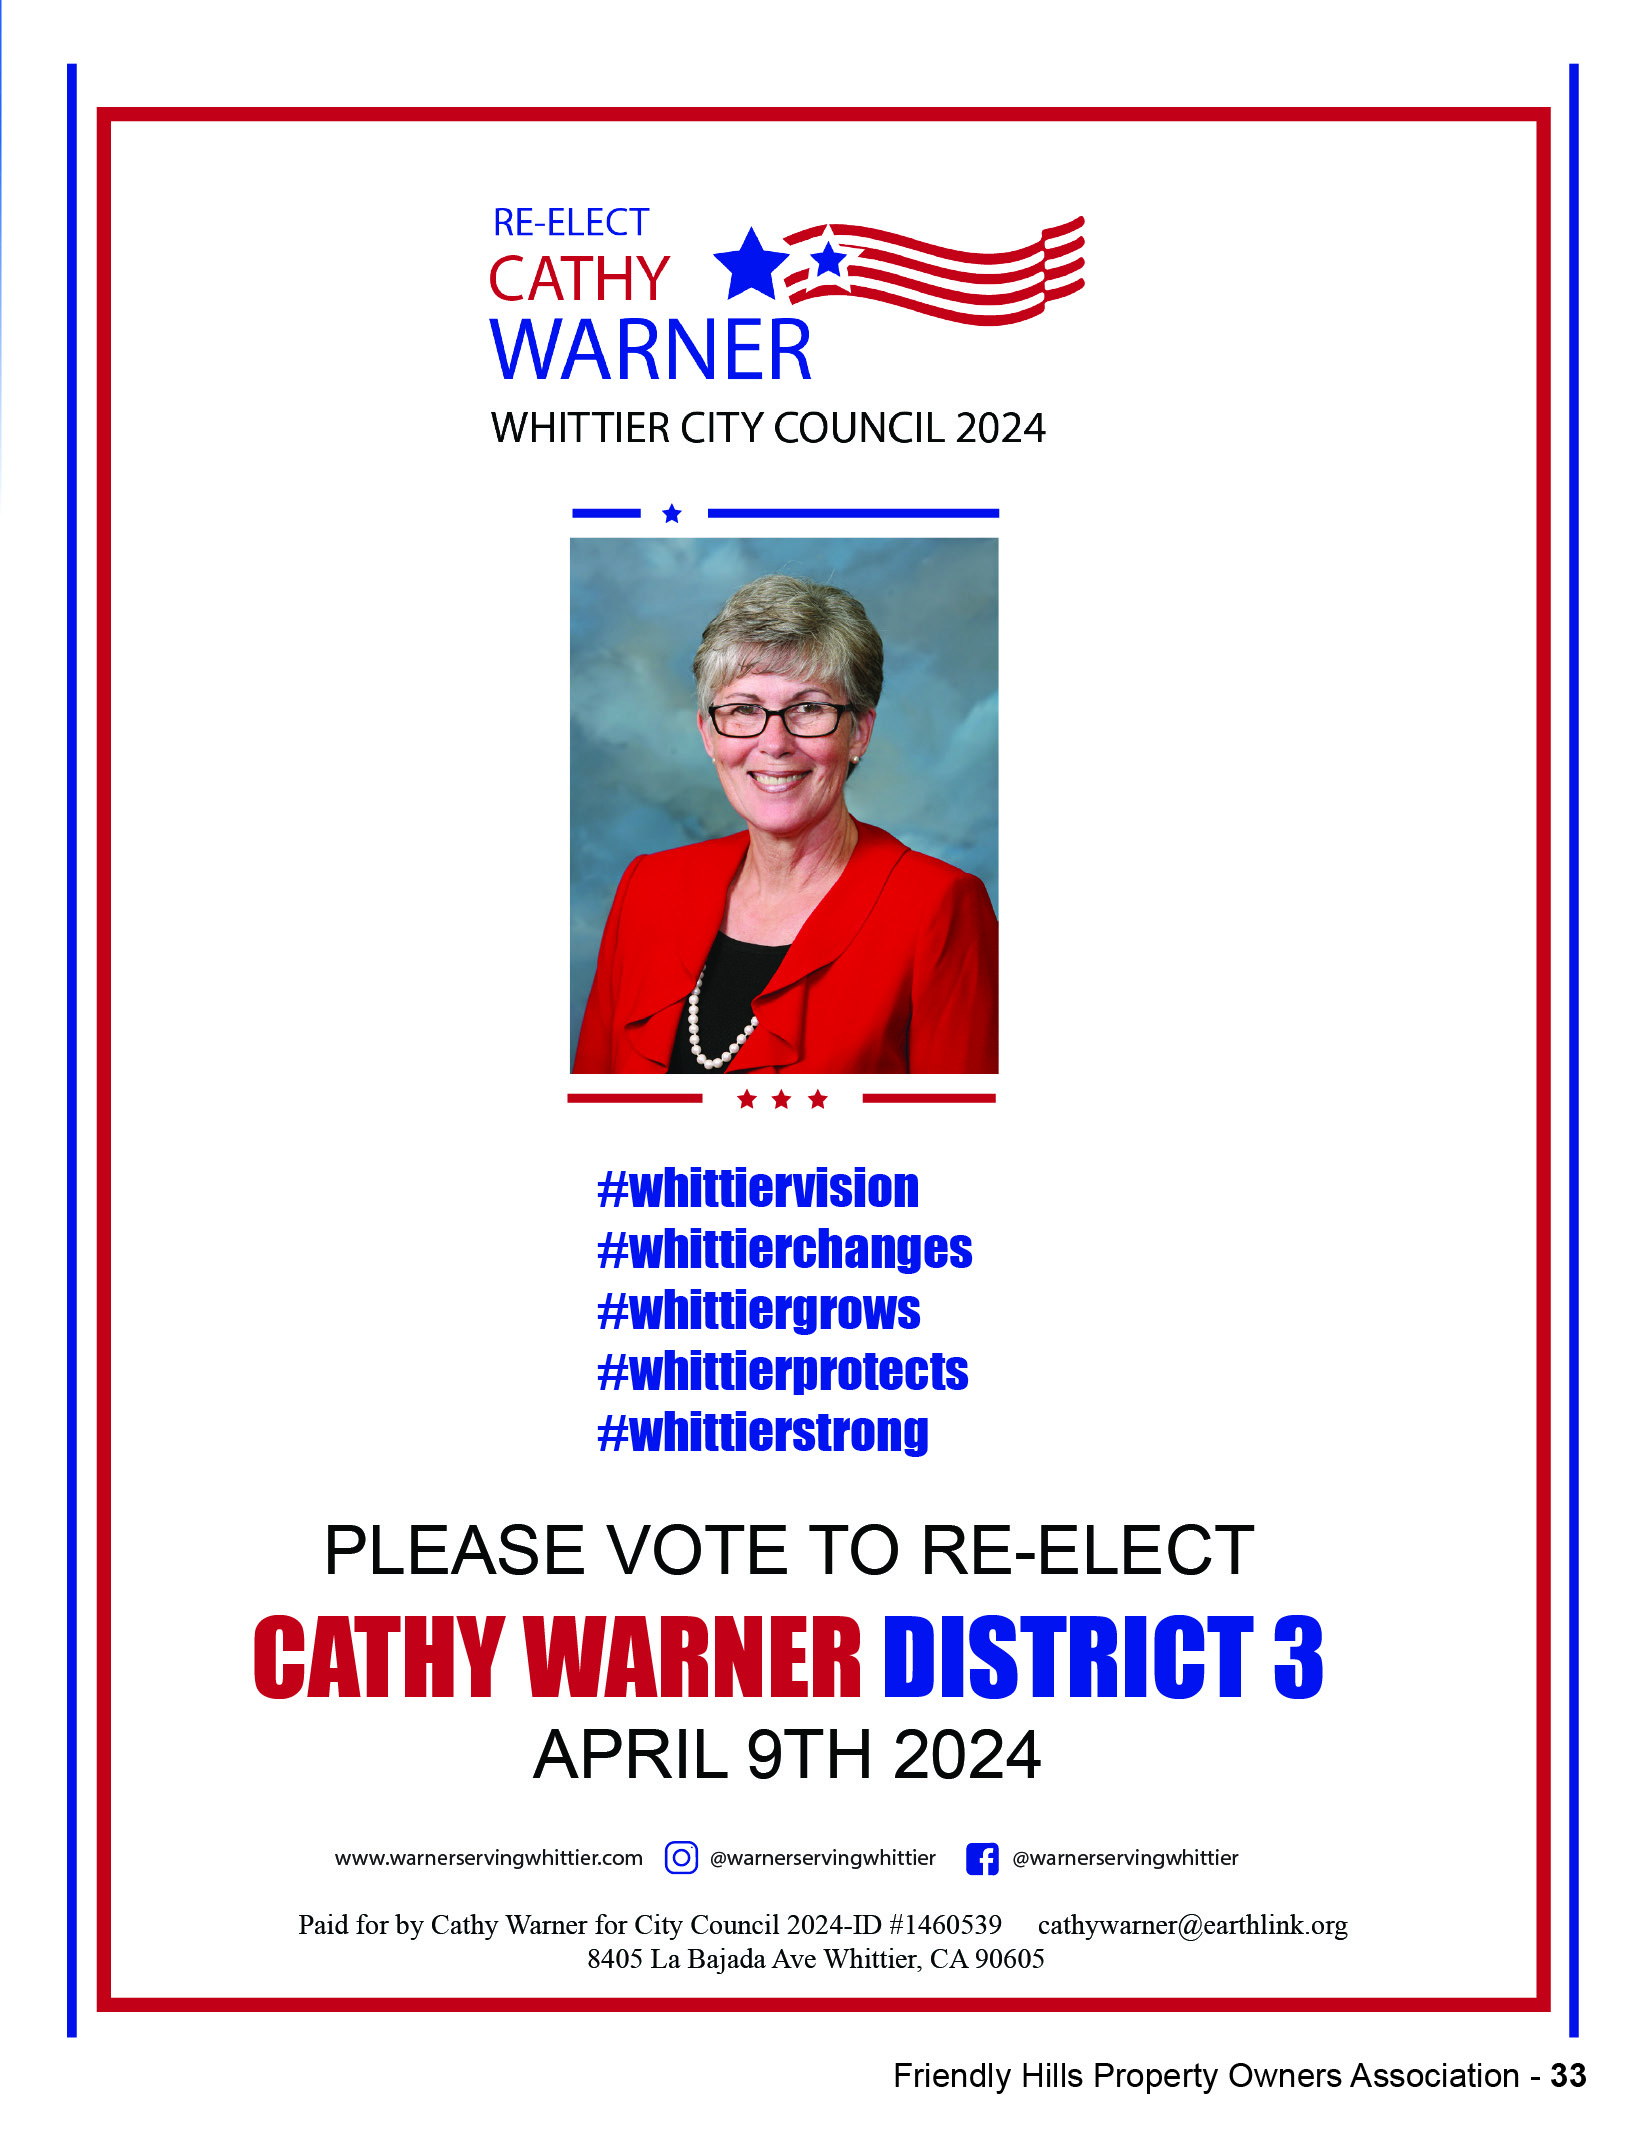 Cathy Warner